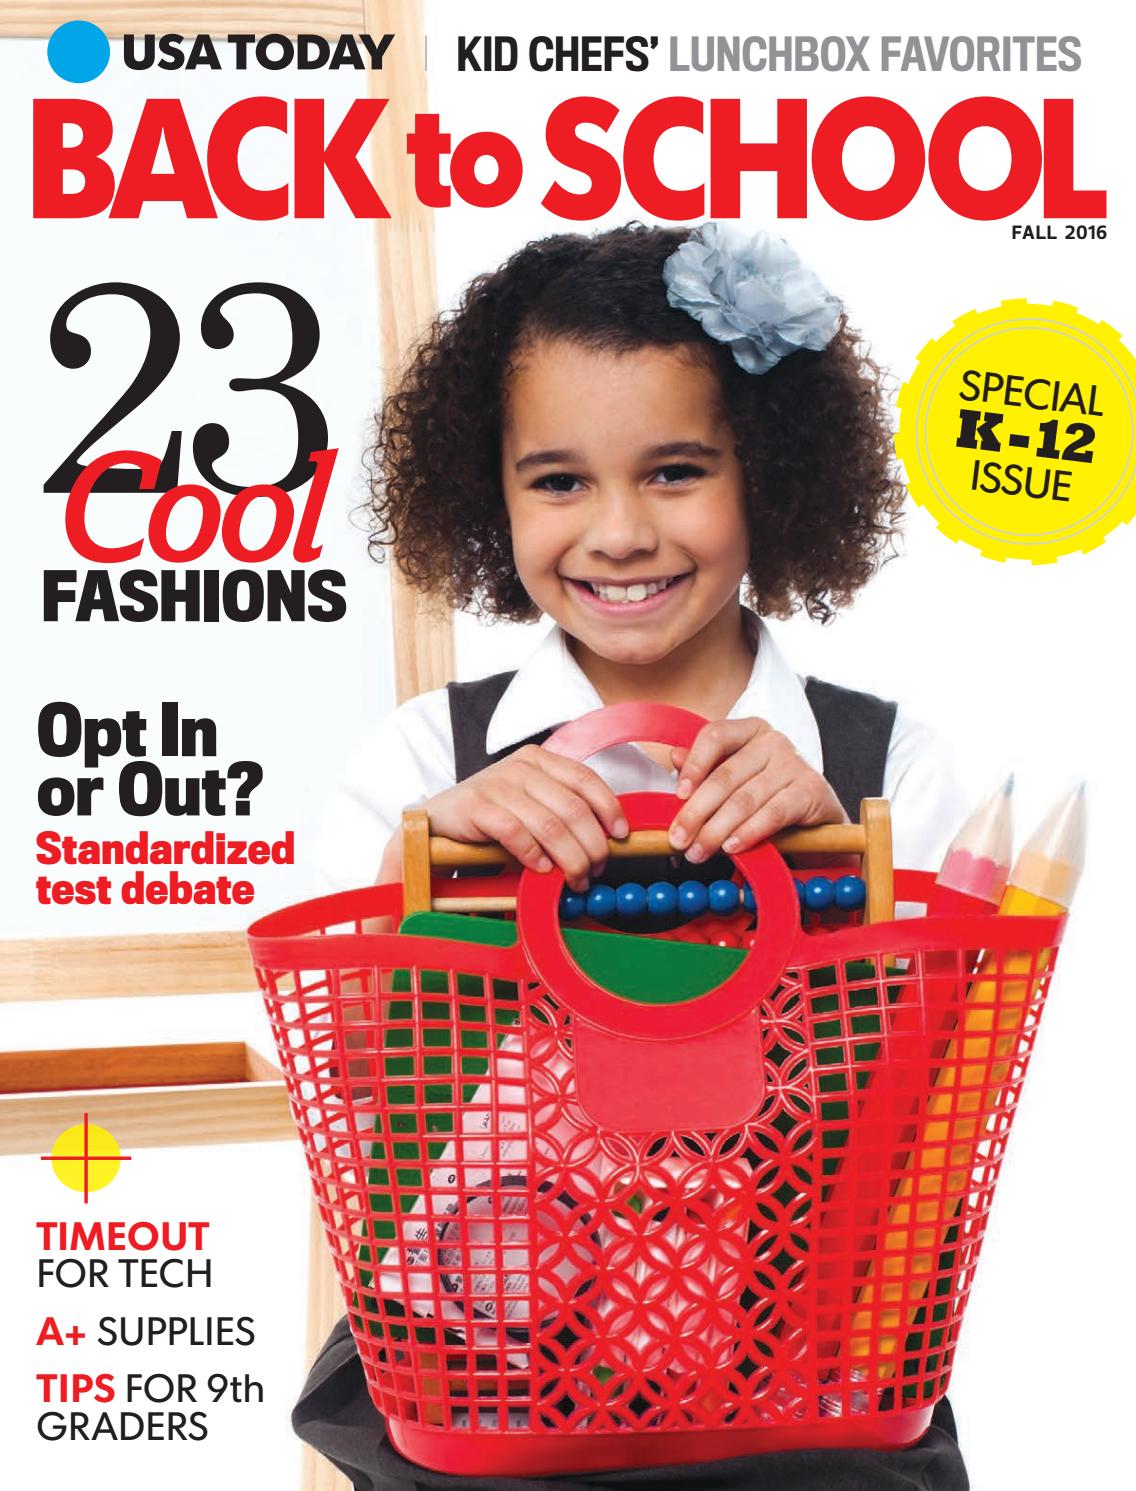 Student magazine. School English журнал. School Magazine article. Magazines about School. Афиша клуба back to School.